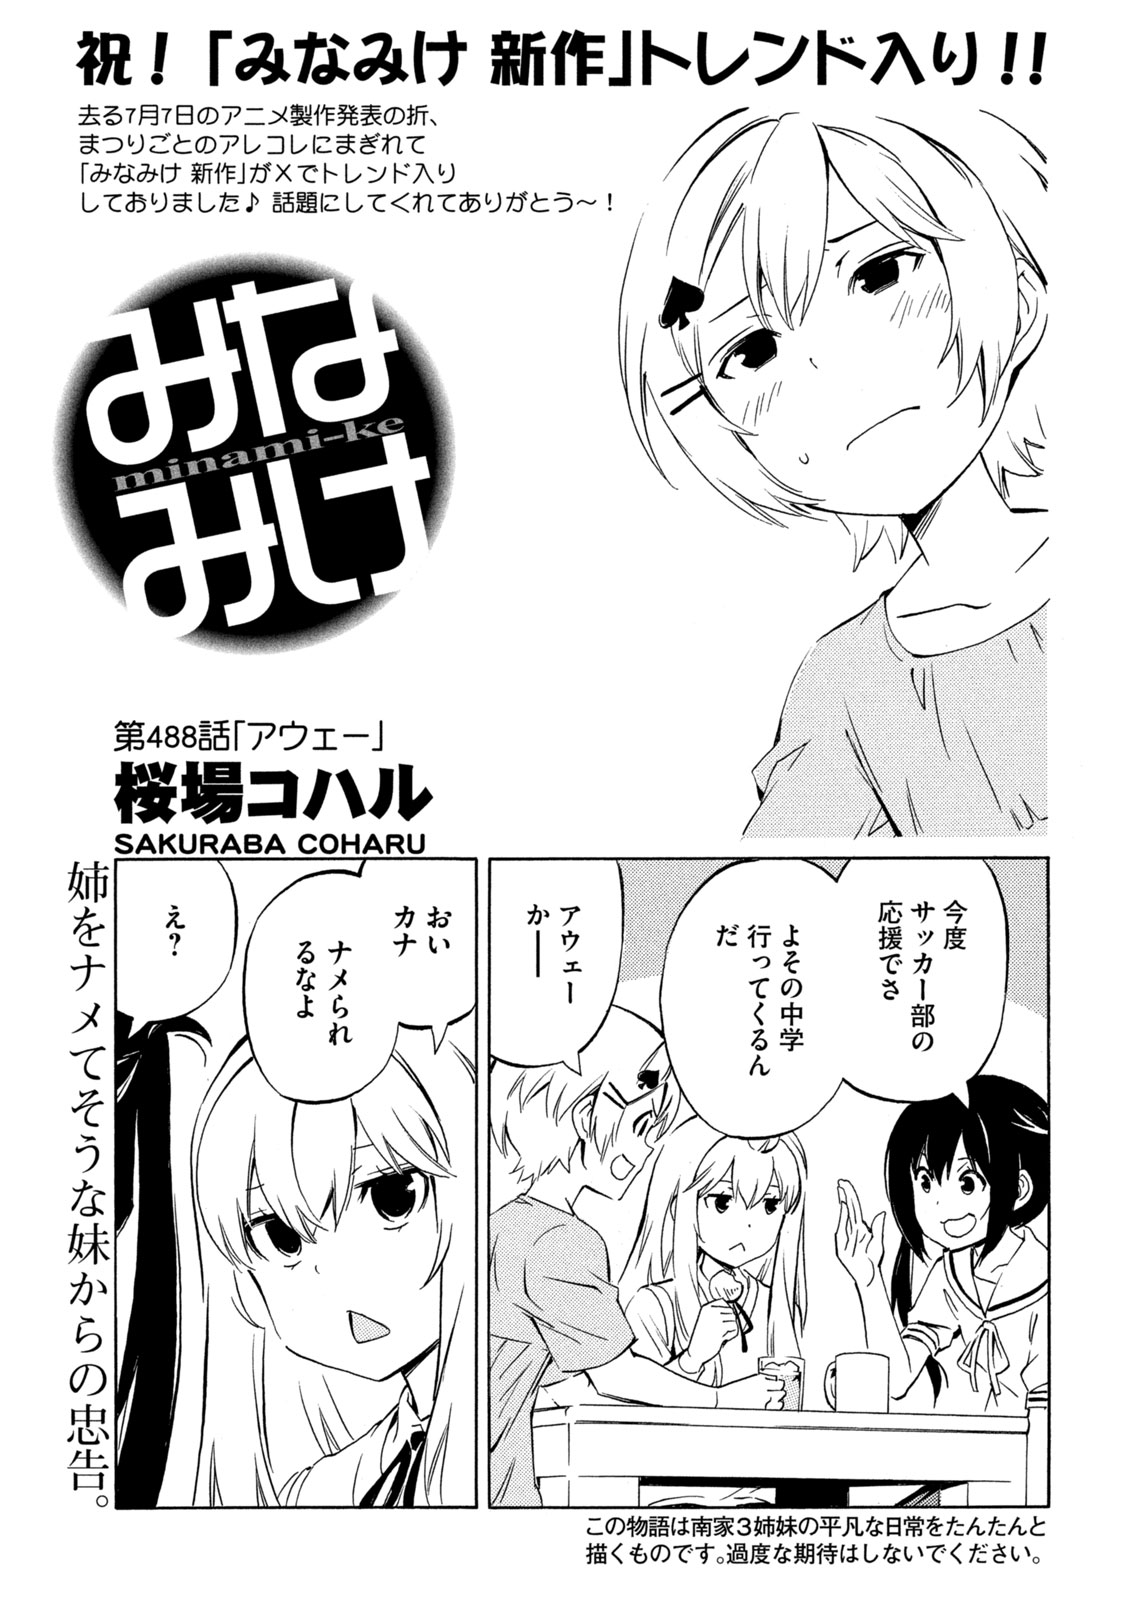 Minami-ke - Chapter 488 - Page 1